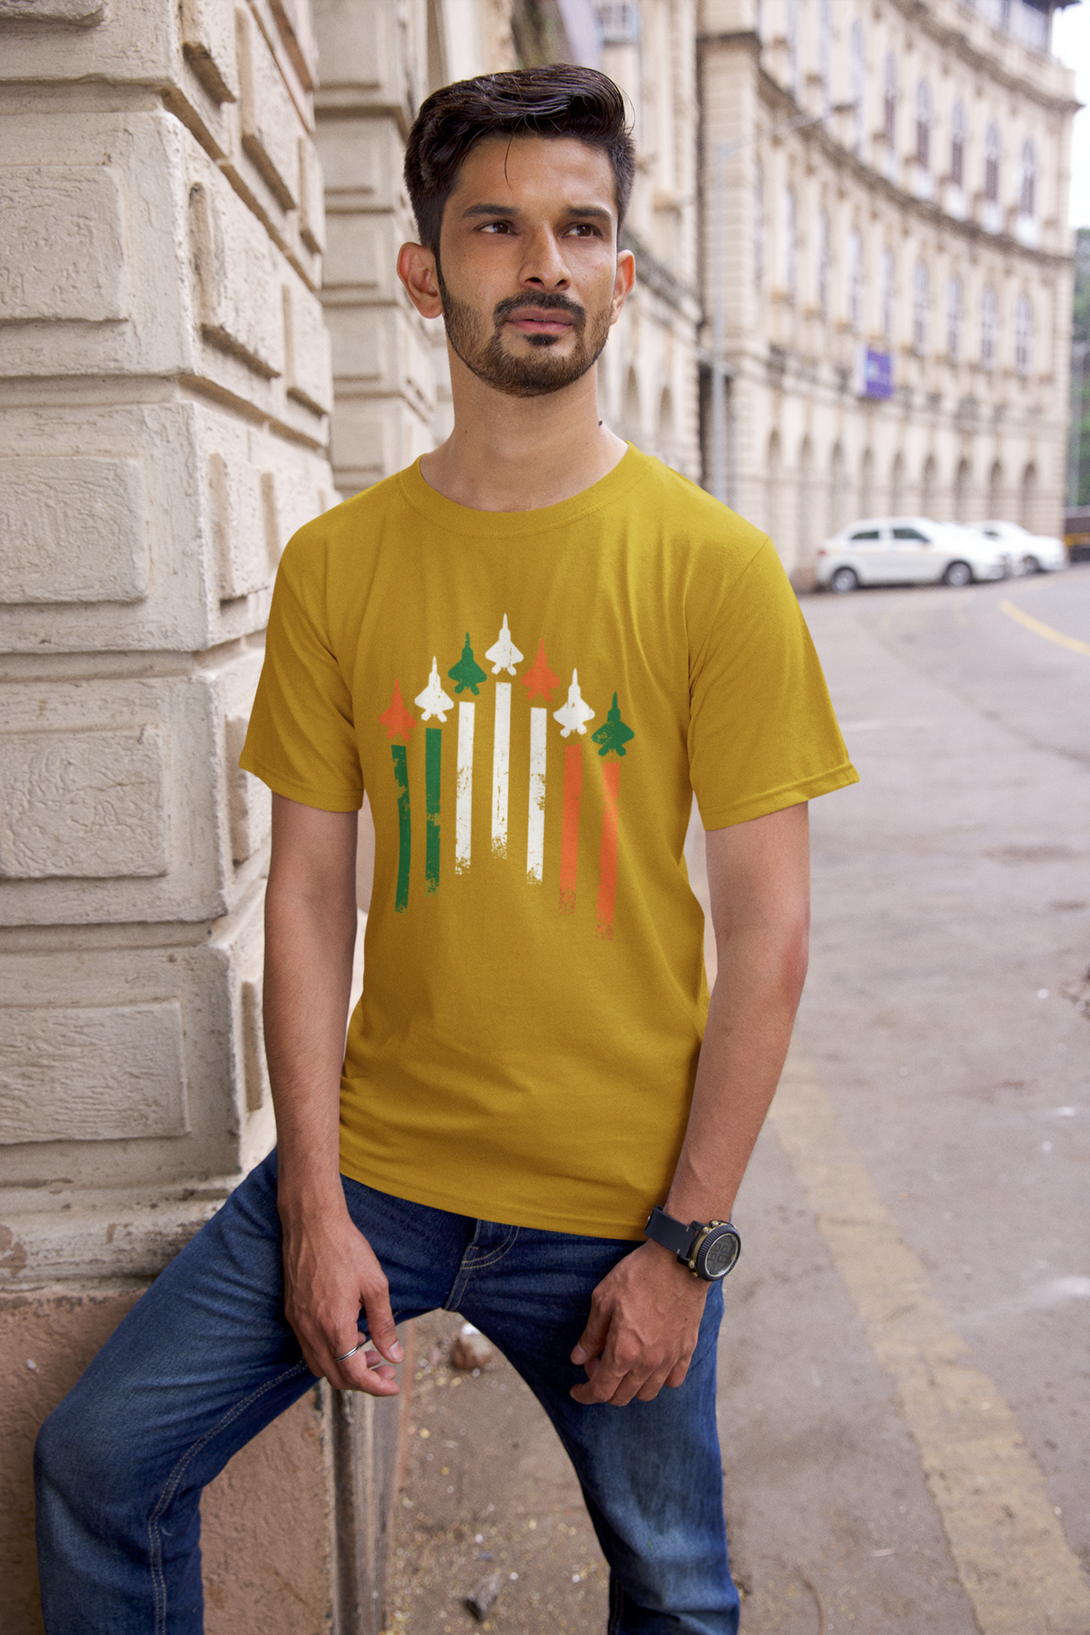 Italian National Printed T-Shirt For Men - WowWaves - 2